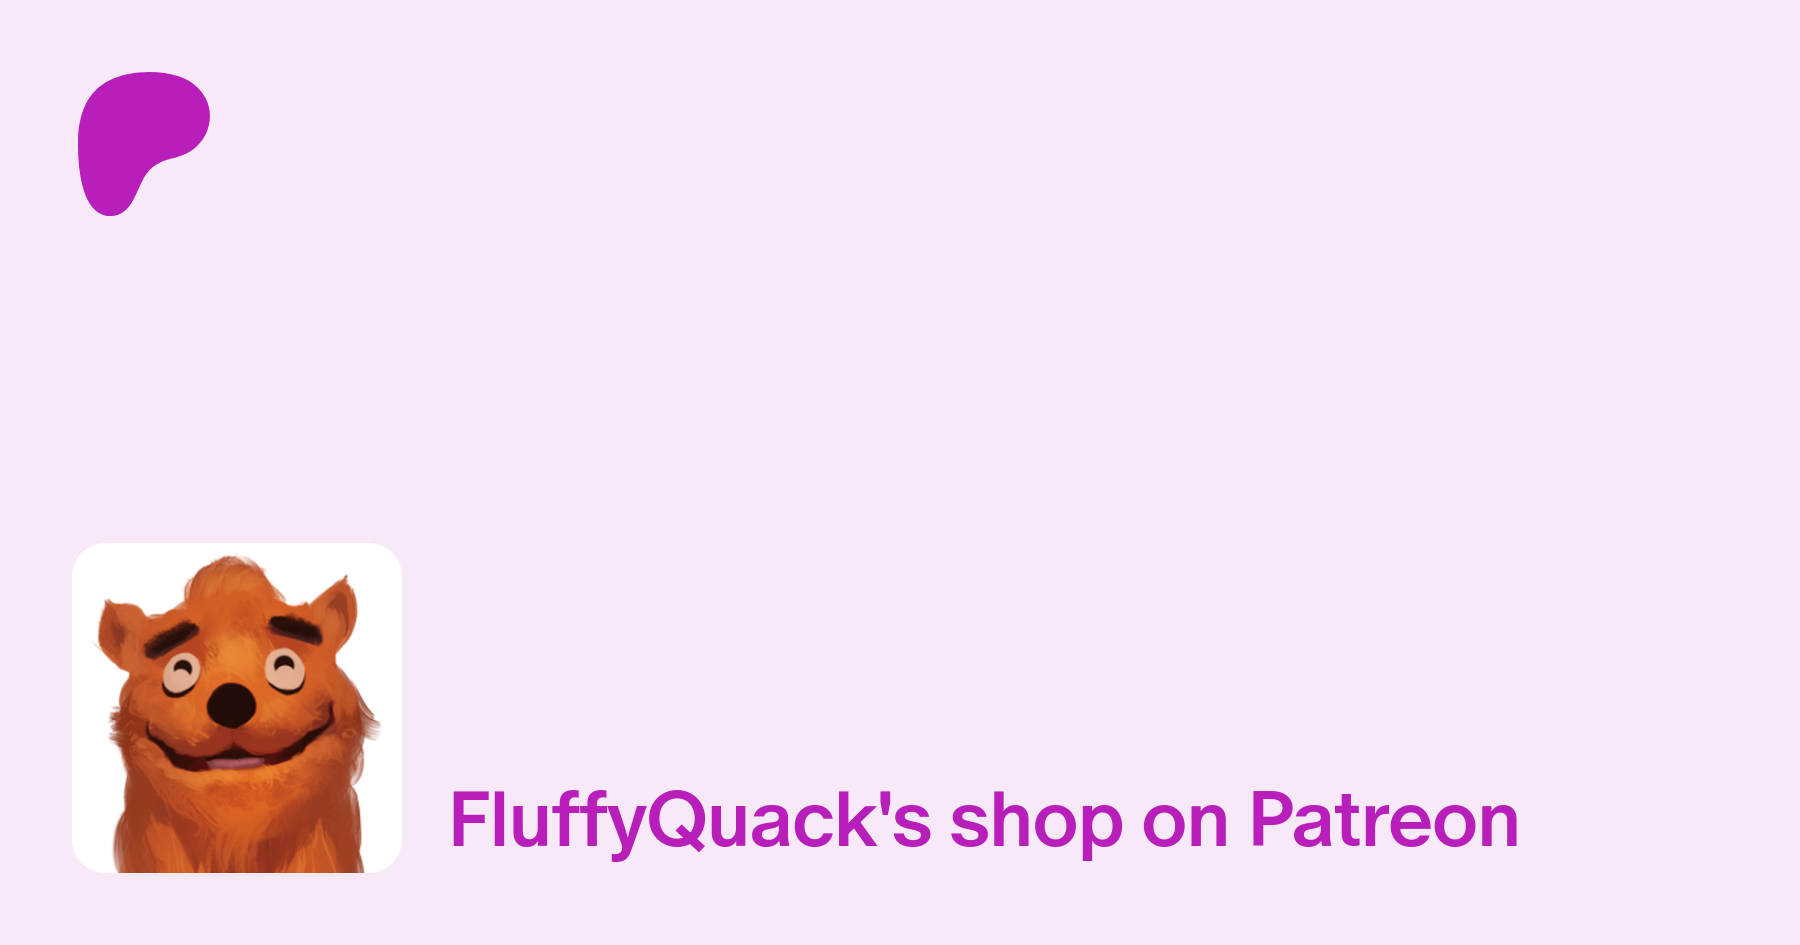 Modding  FluffyQuack